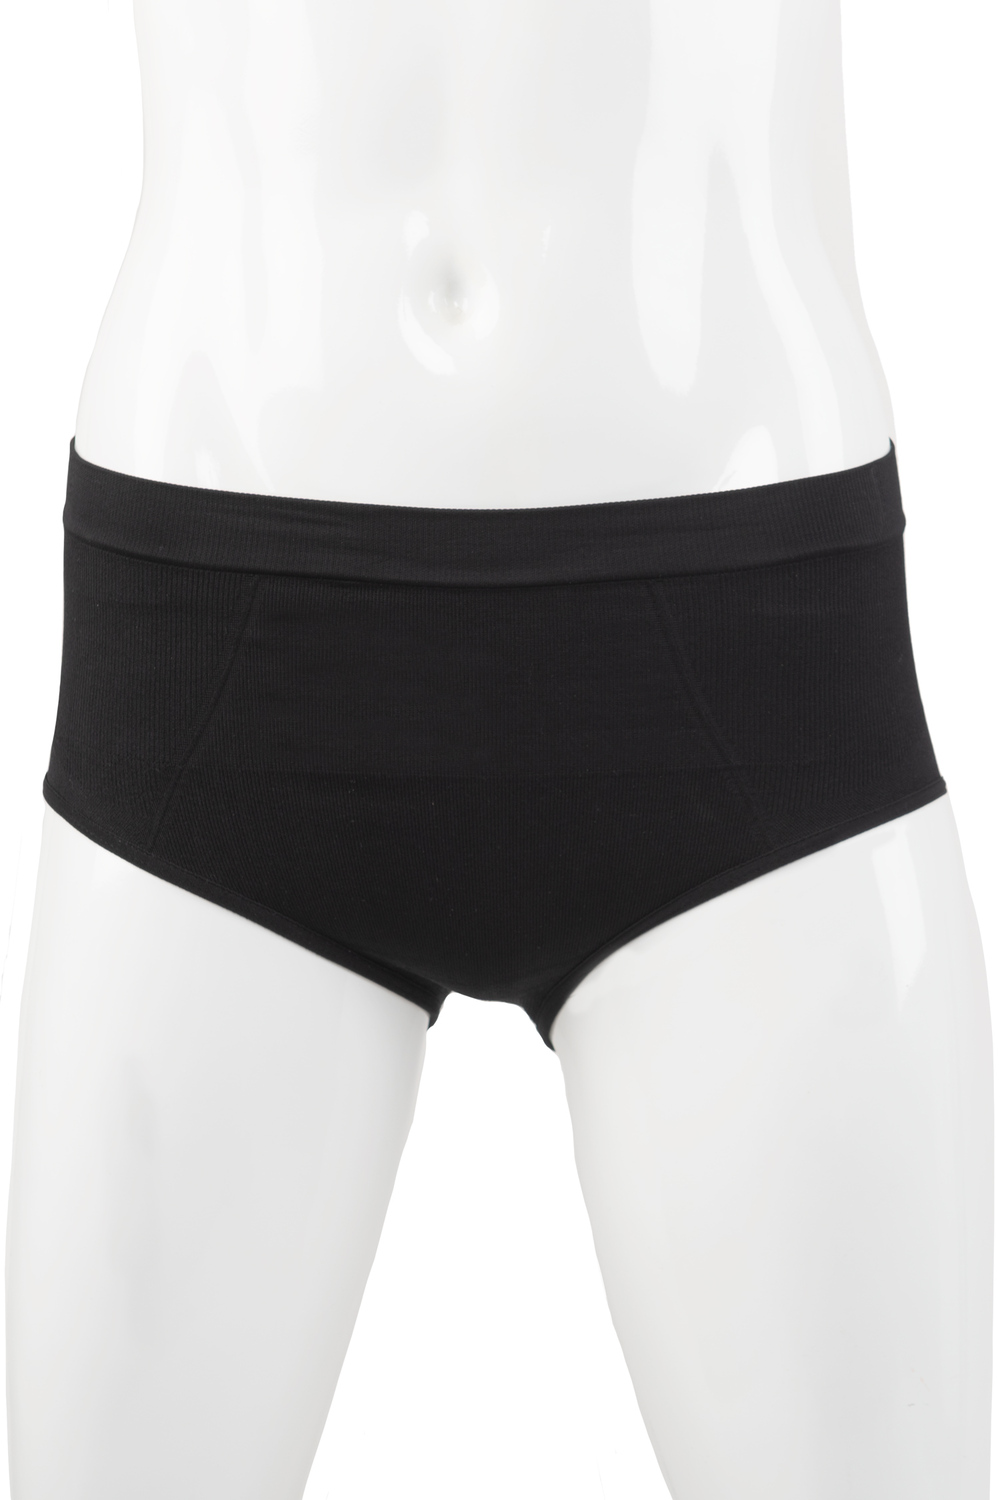 Seamless boyleg panty with light support - Black. Colour: black